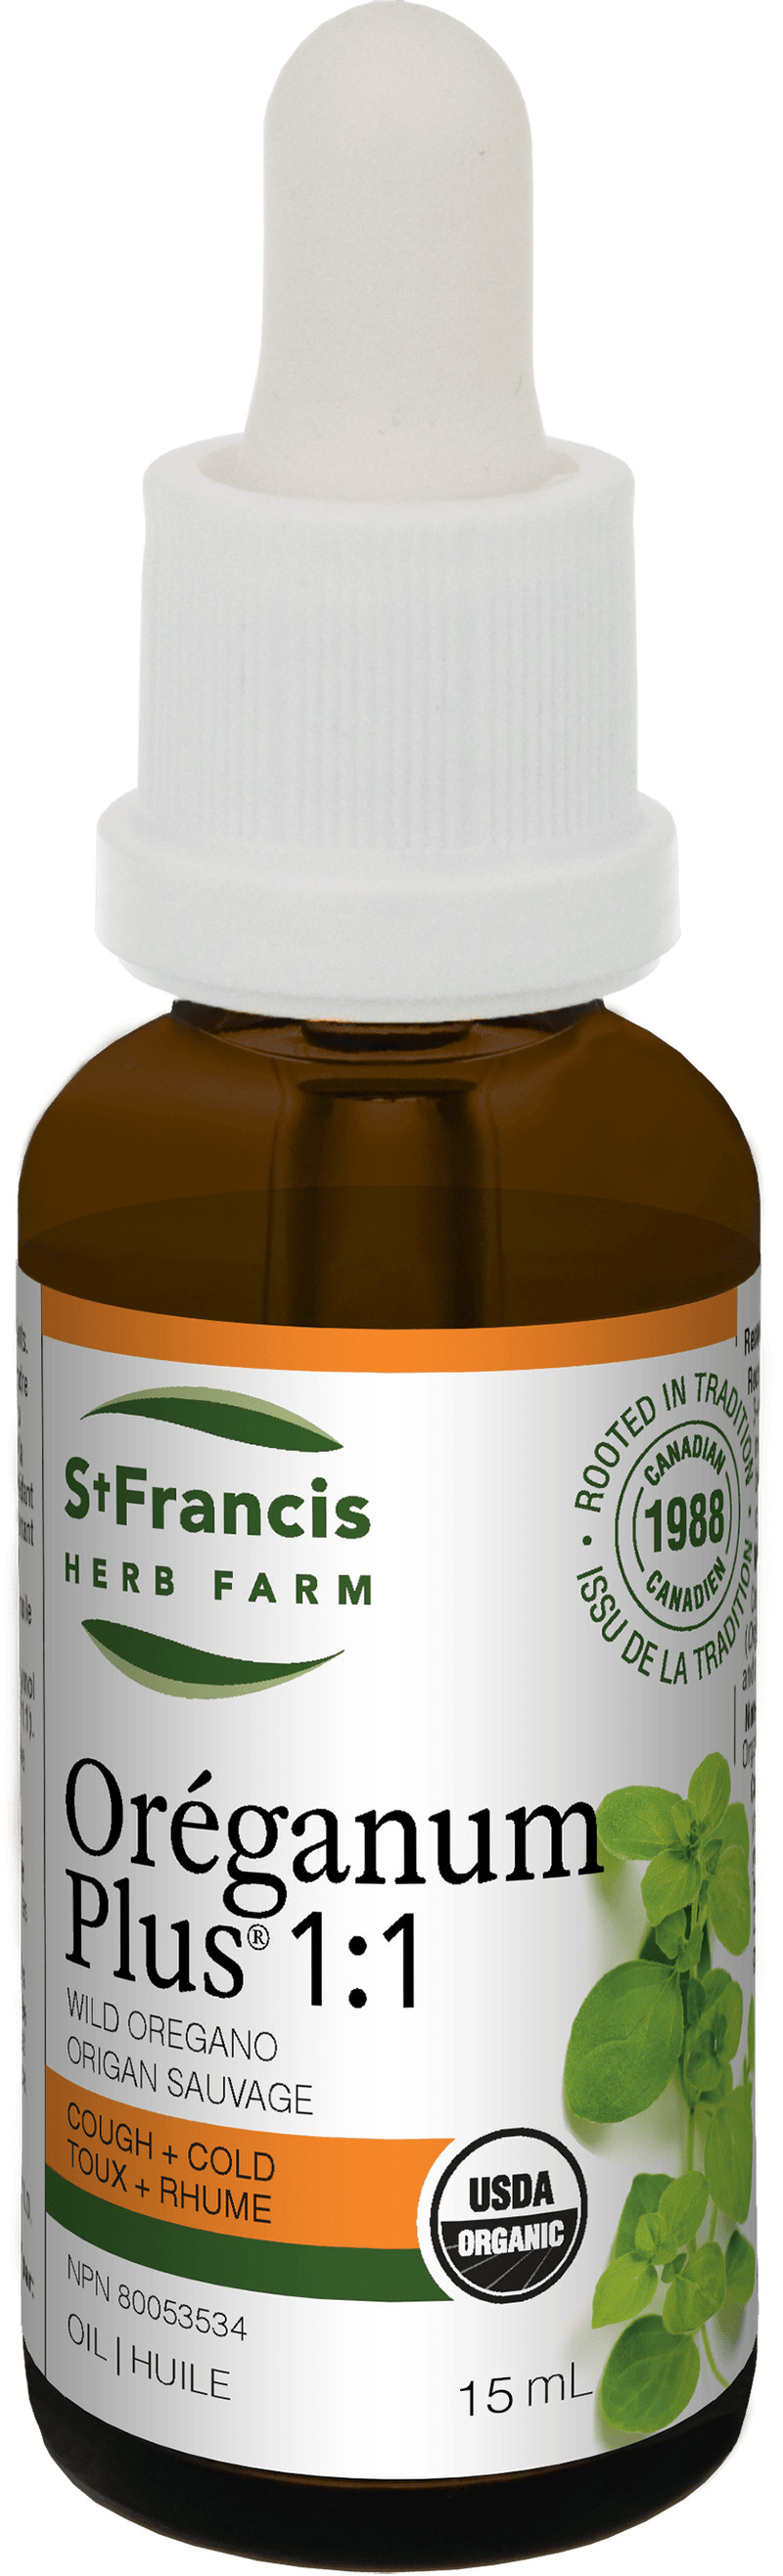 St Francis Herb Farm Oreganum Plus 1:1